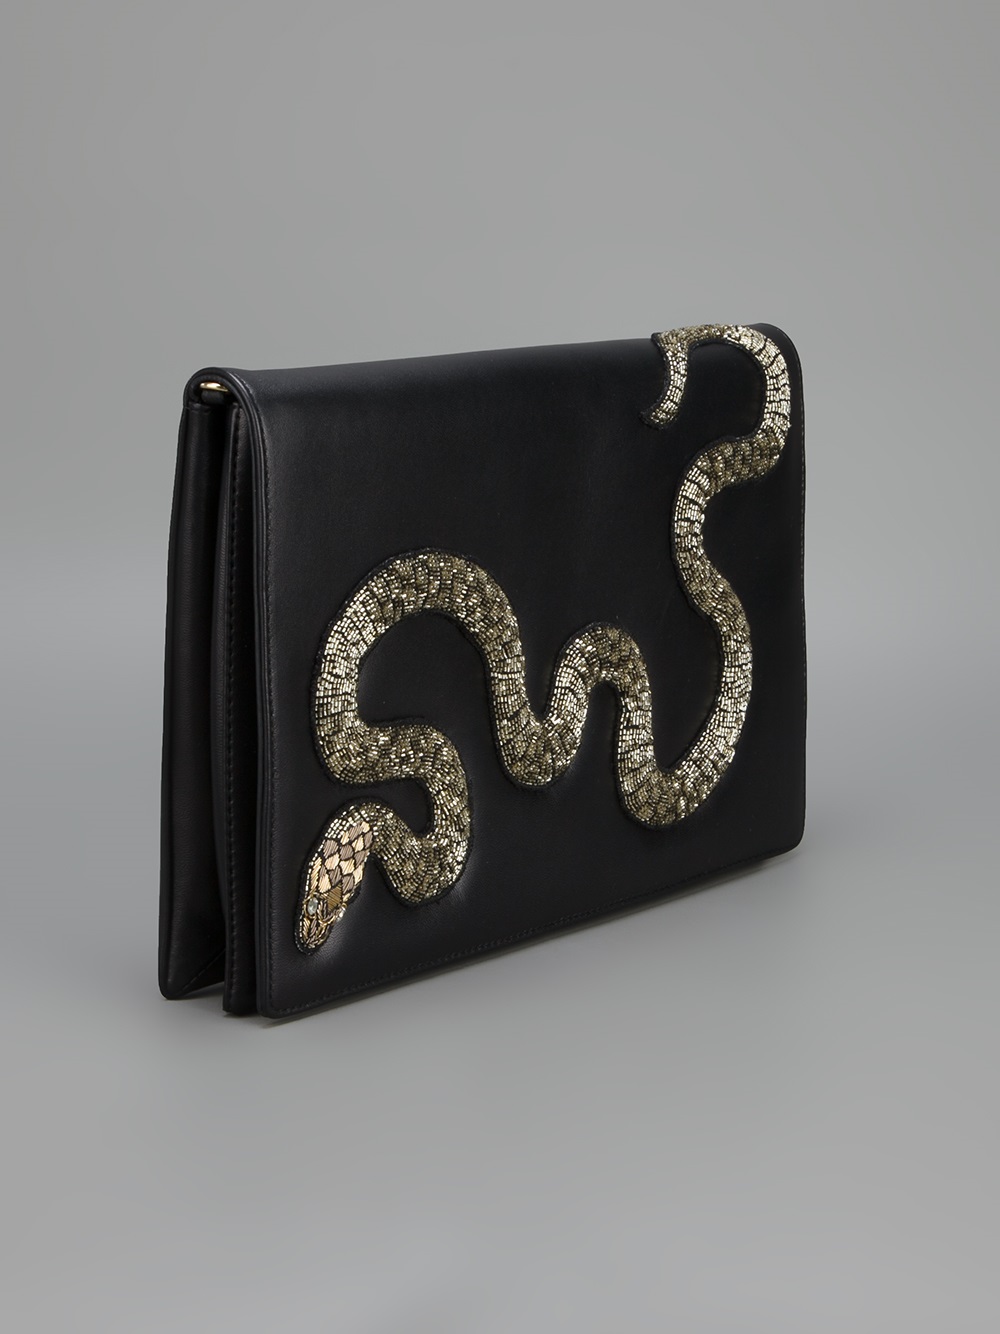 Roberto Cavalli Embellished Snake Clutch in Black - Lyst